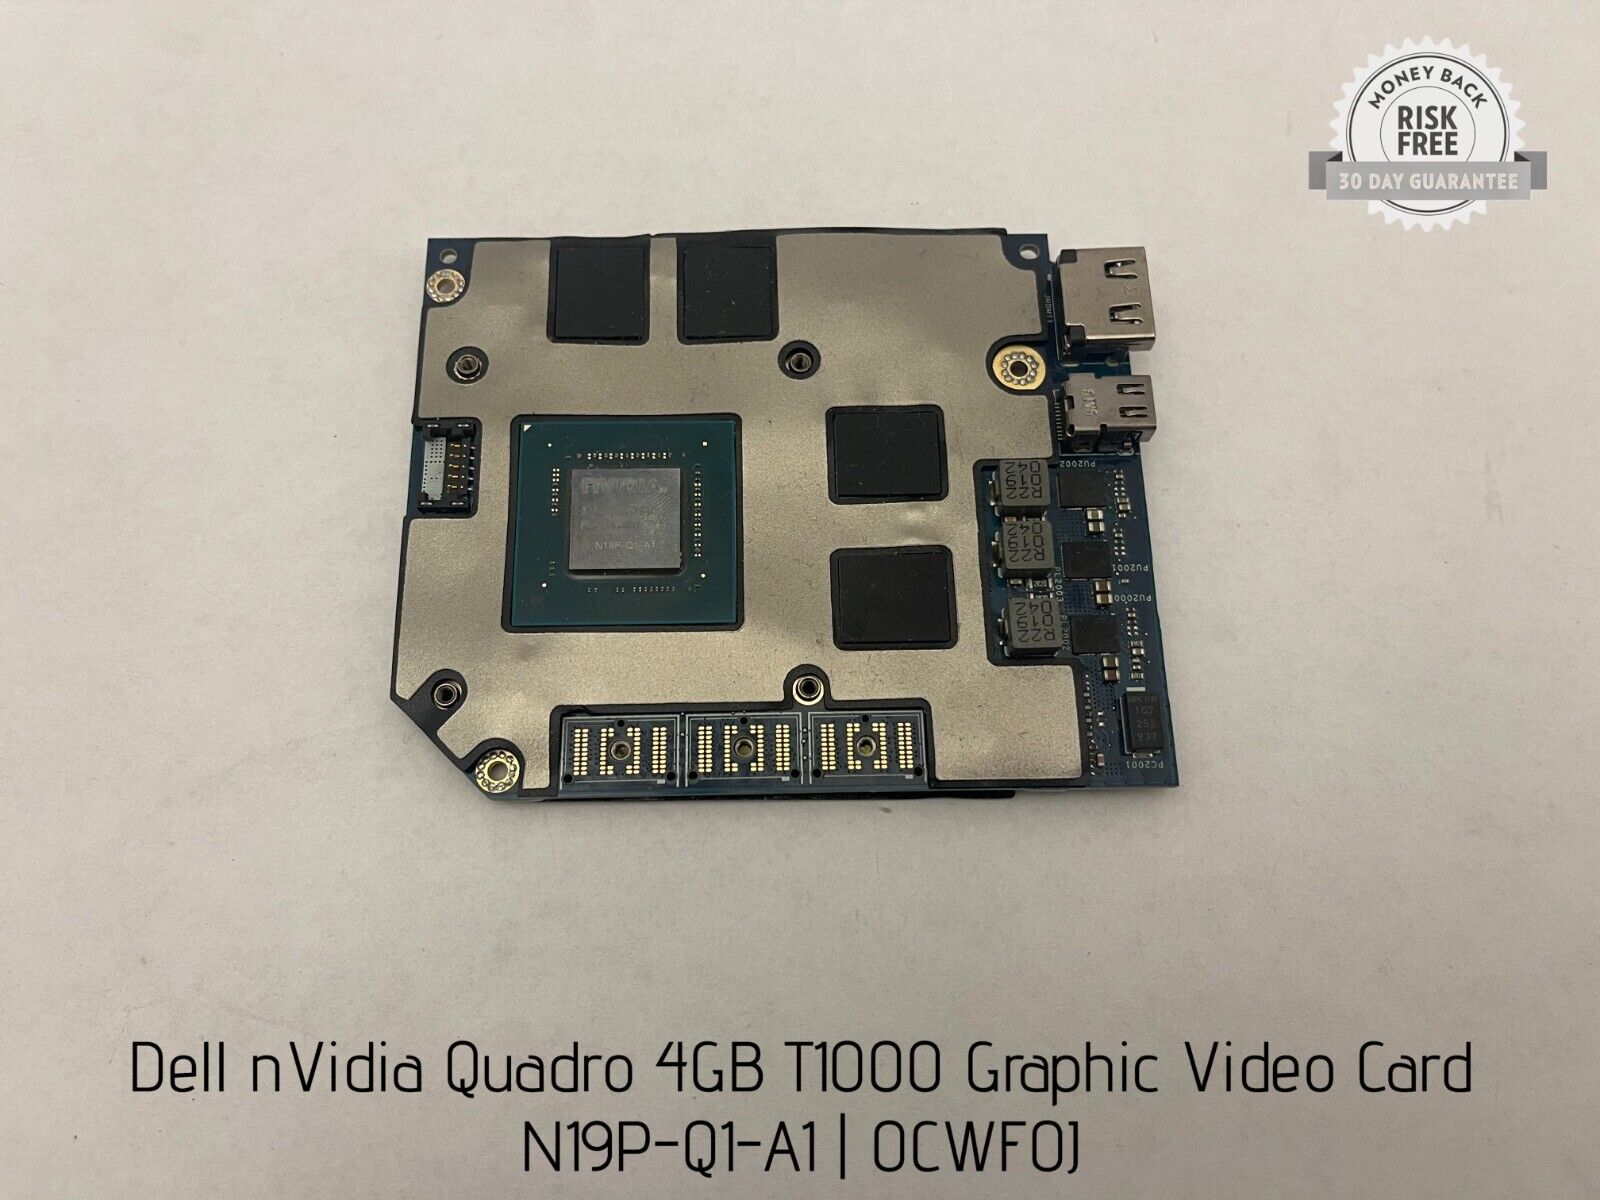 Dell nVidia Quadro 4GB T1000 Graphic Video Card, N19P-Q1-A1, 0CWF0J